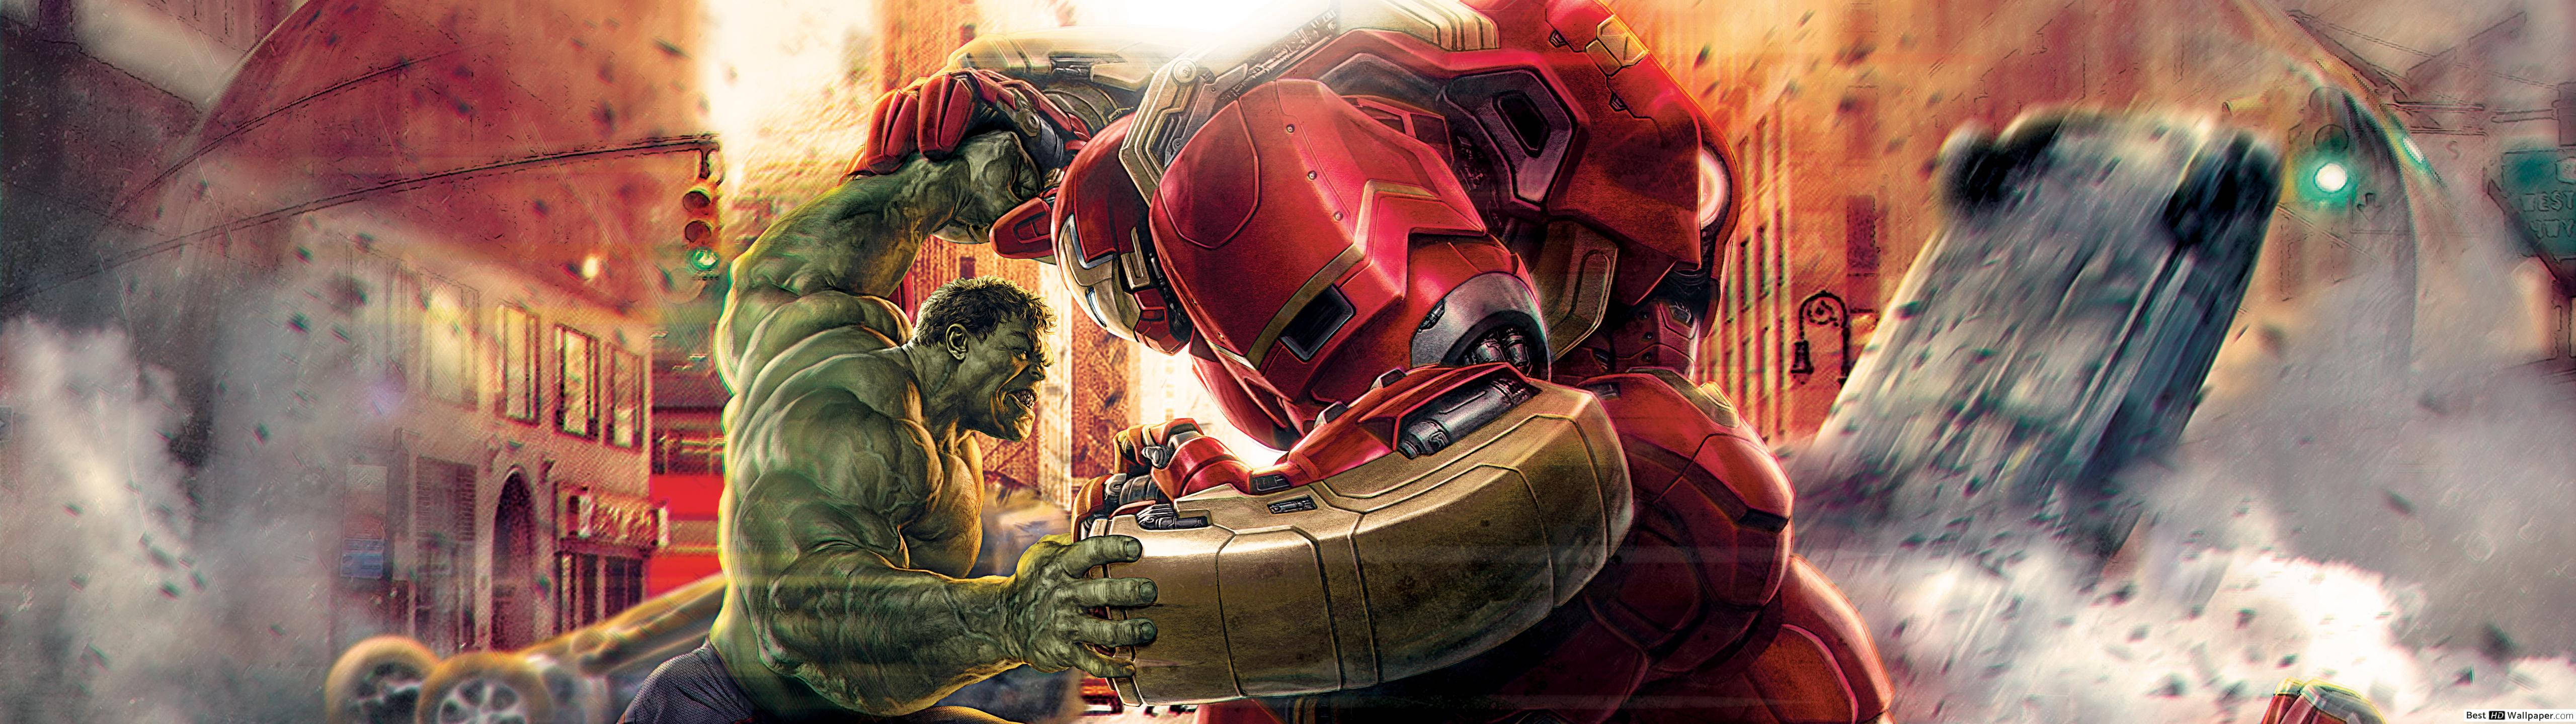 Marvel's Ironman Vs Hulk 5120 X 1440